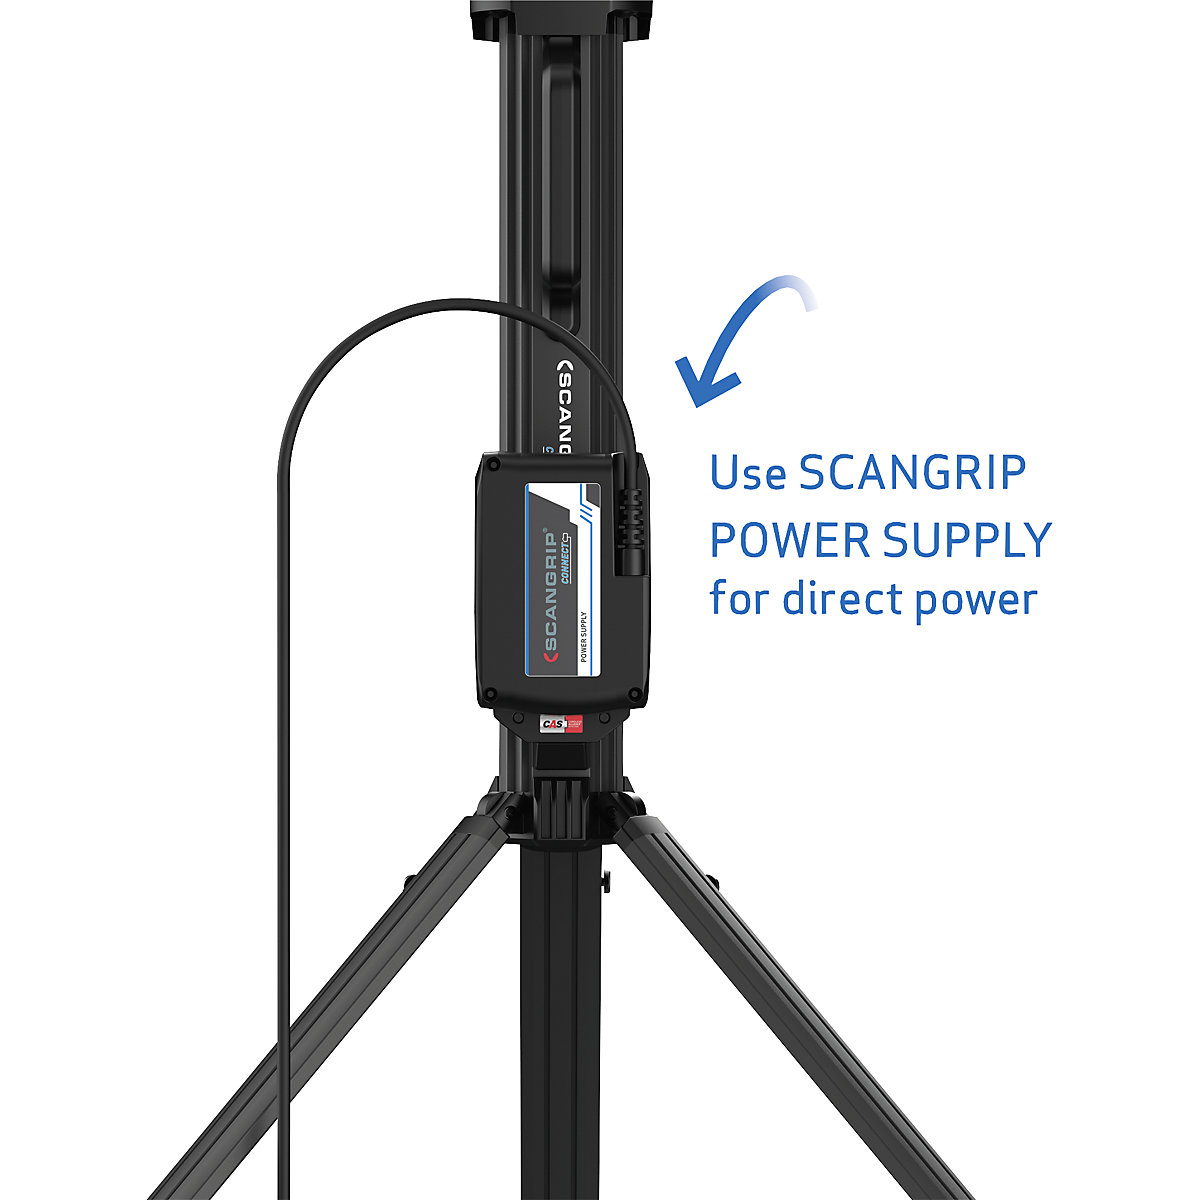 Stavebný LED reflektor TOWER 5 CONNECT – SCANGRIP (Zobrazenie produktu 12)-11